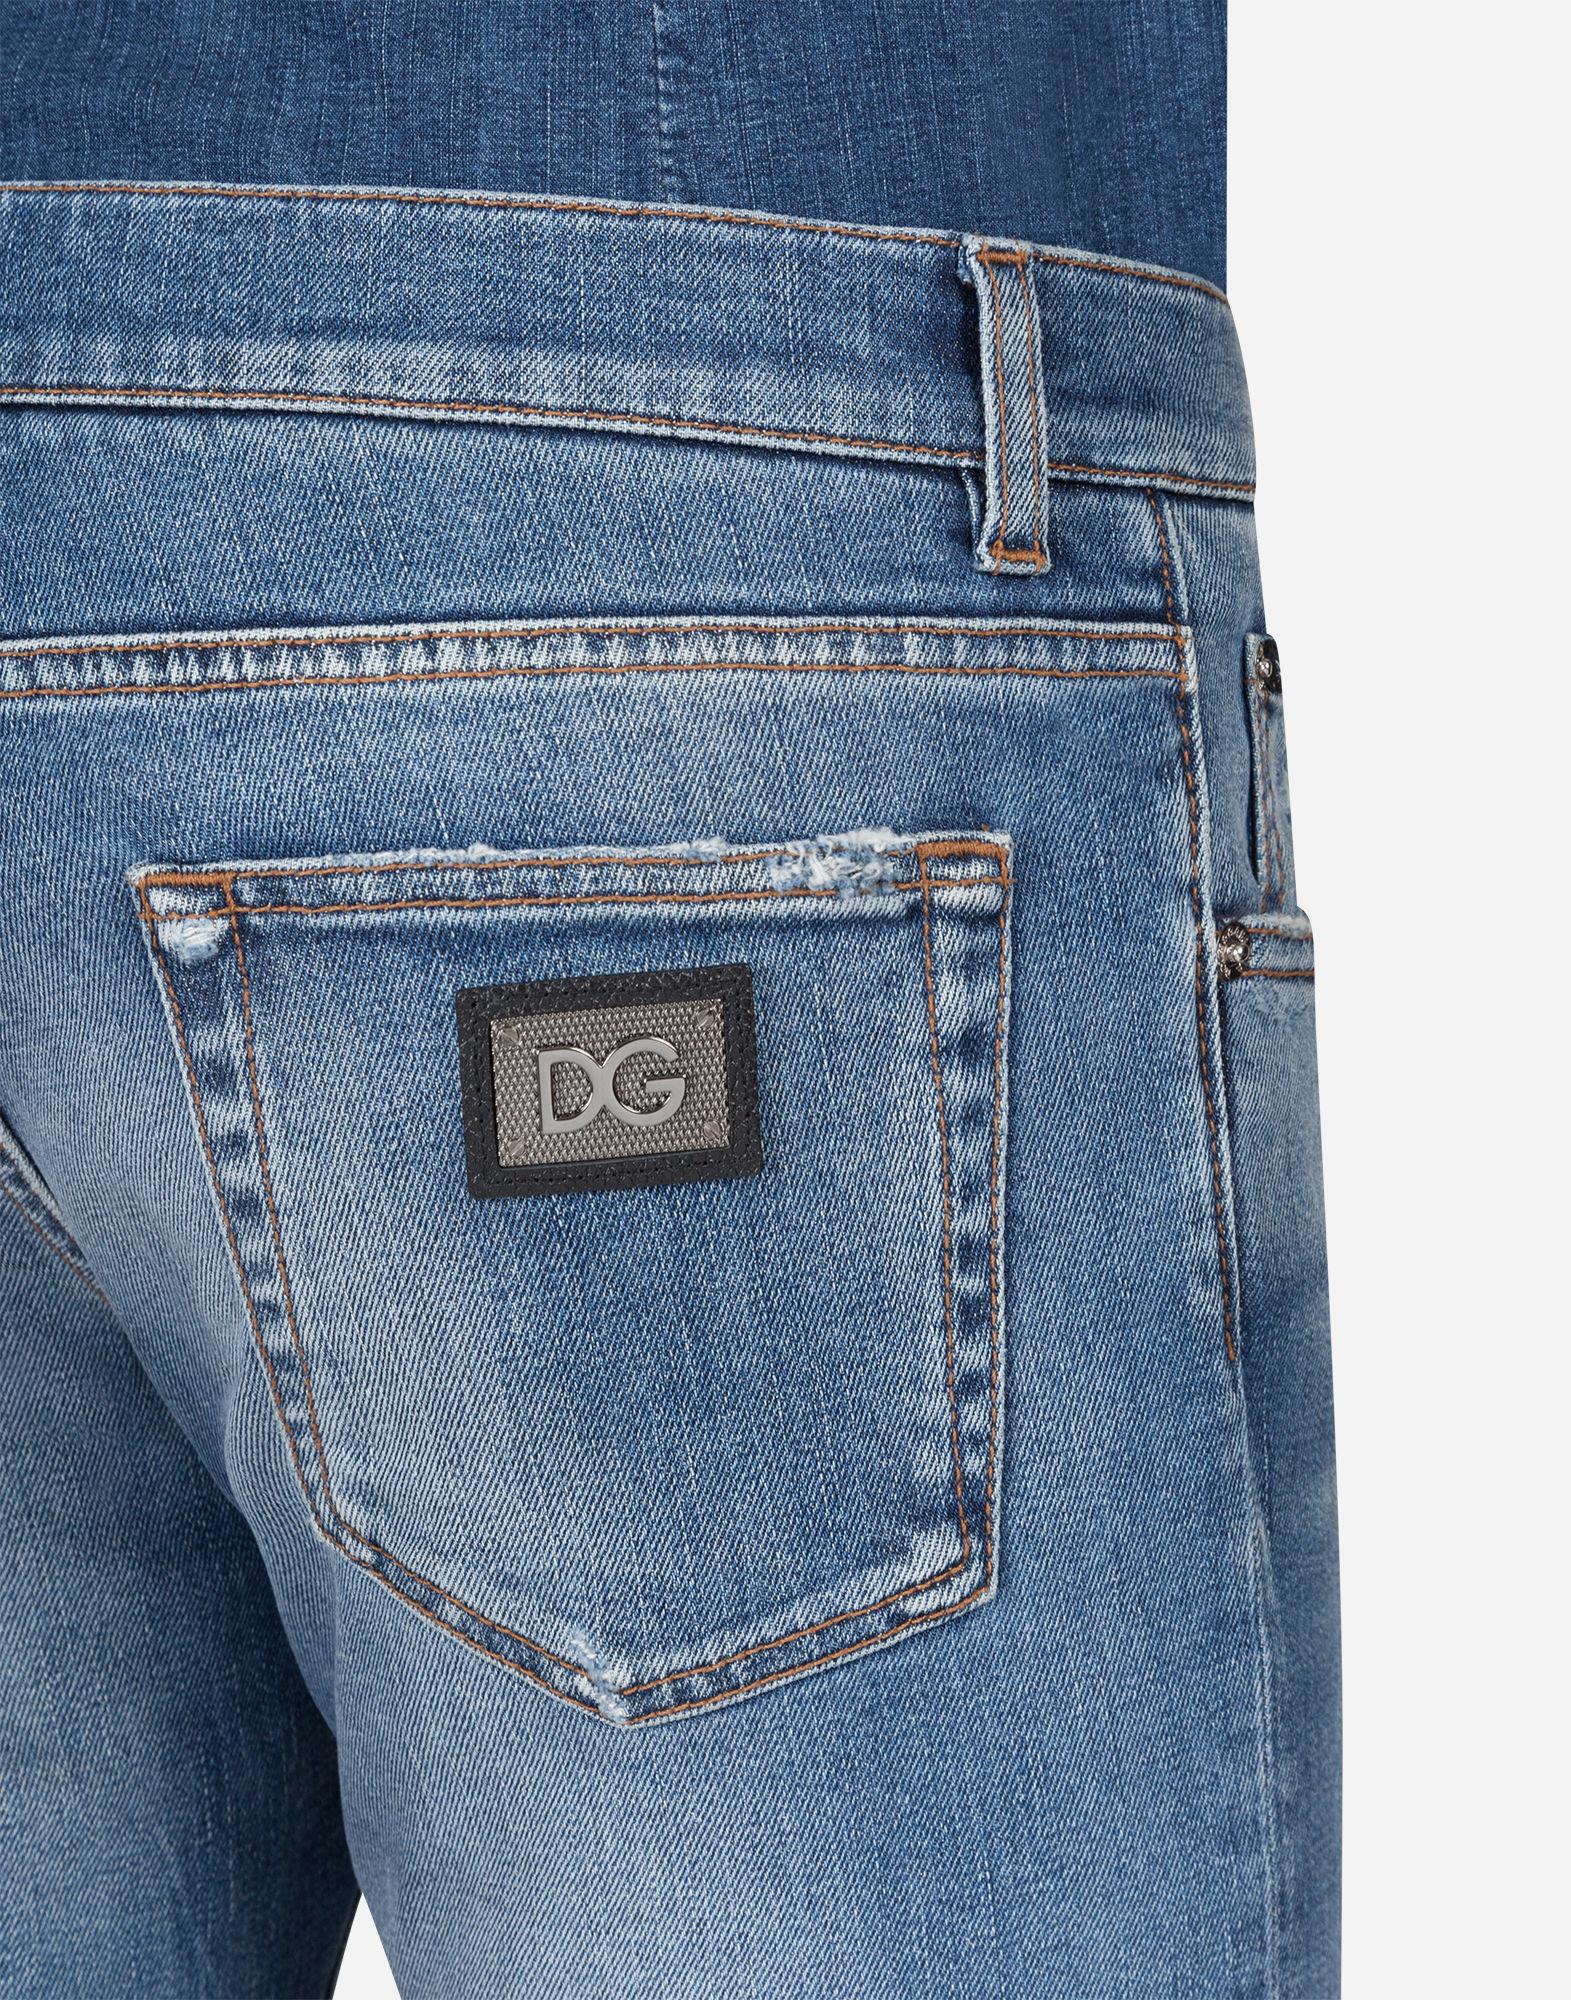 Dolce & Gabbana Denim Stretch Jeans Skinny Fit in Blue for Men - Lyst